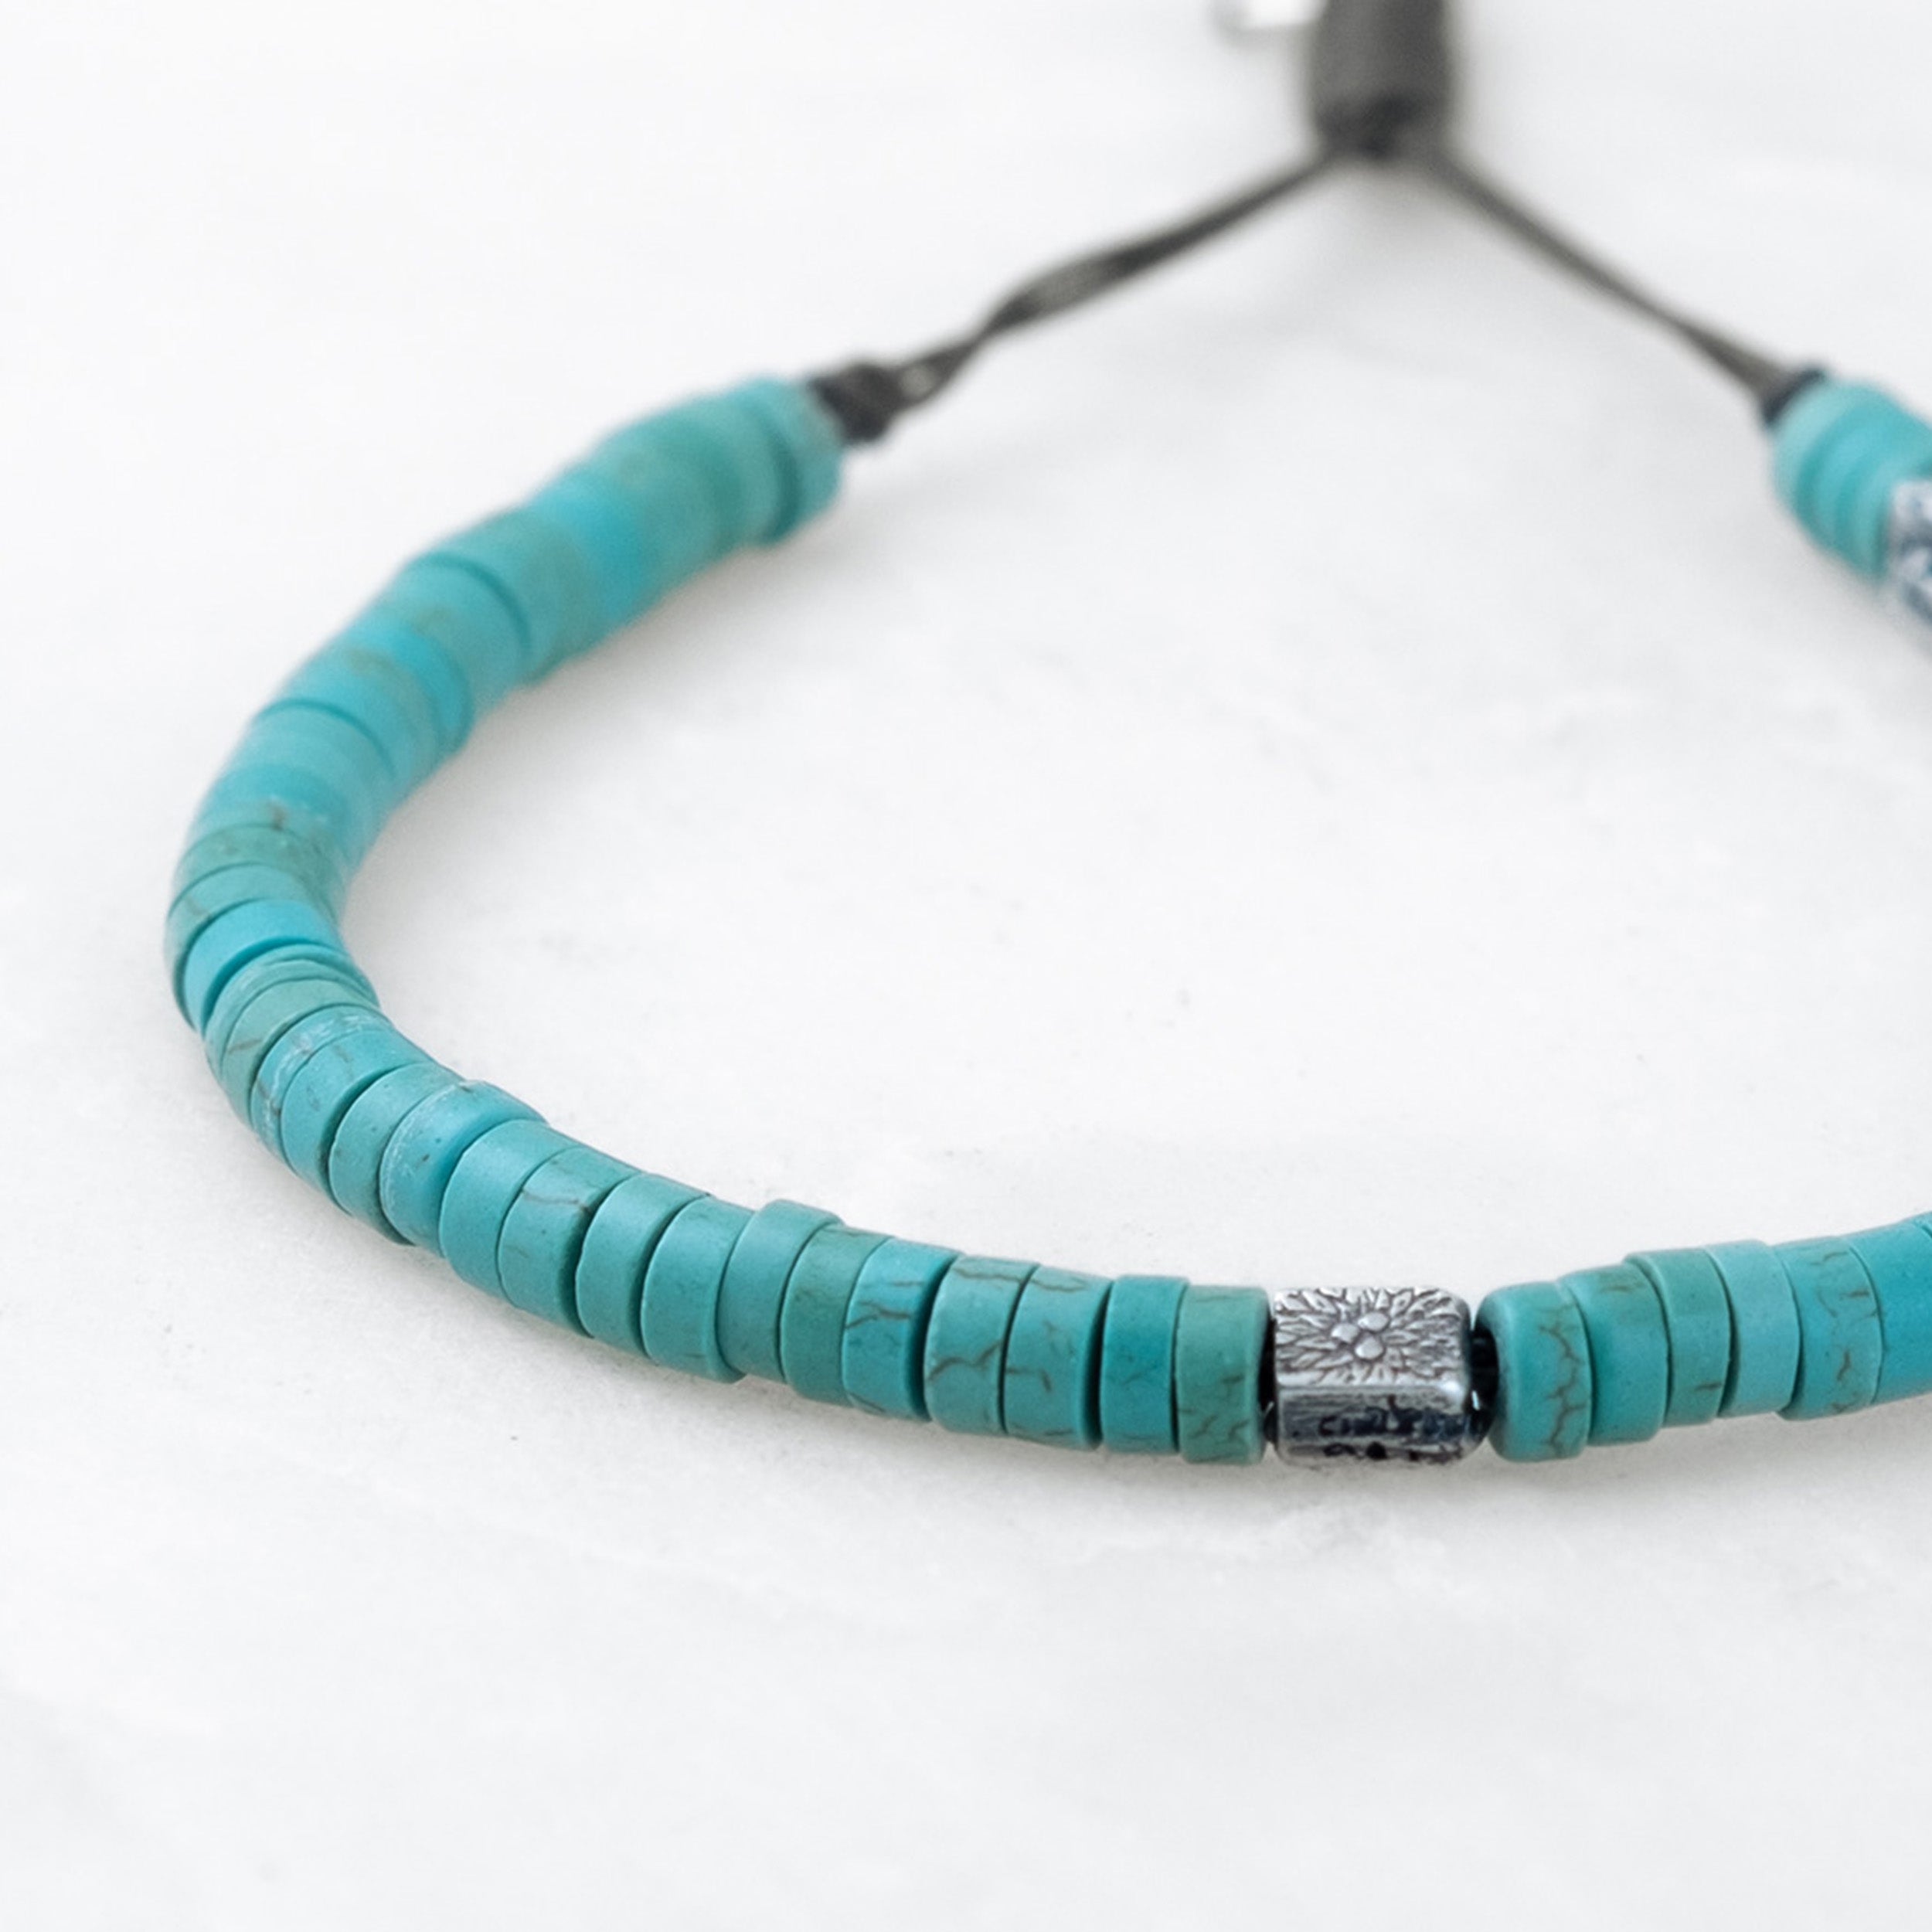 TIBET COLOR Bracelet - Turquoise, Silver Bodhi